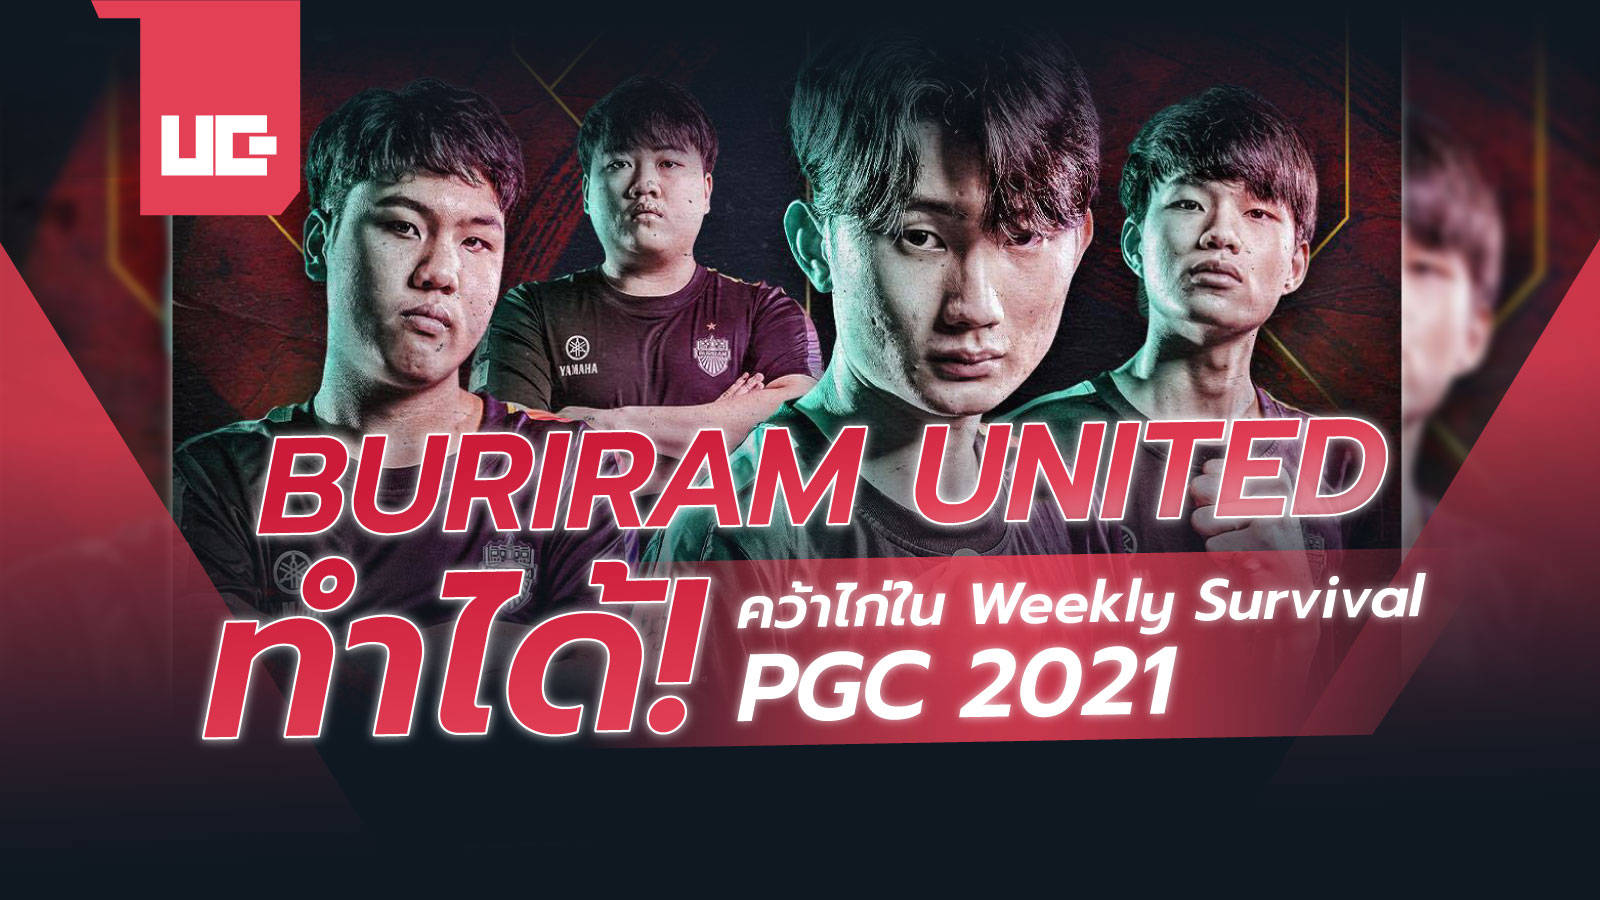 Buriram United ทำได้! คว้าไก่ใน Weekly Survival PGC 2021